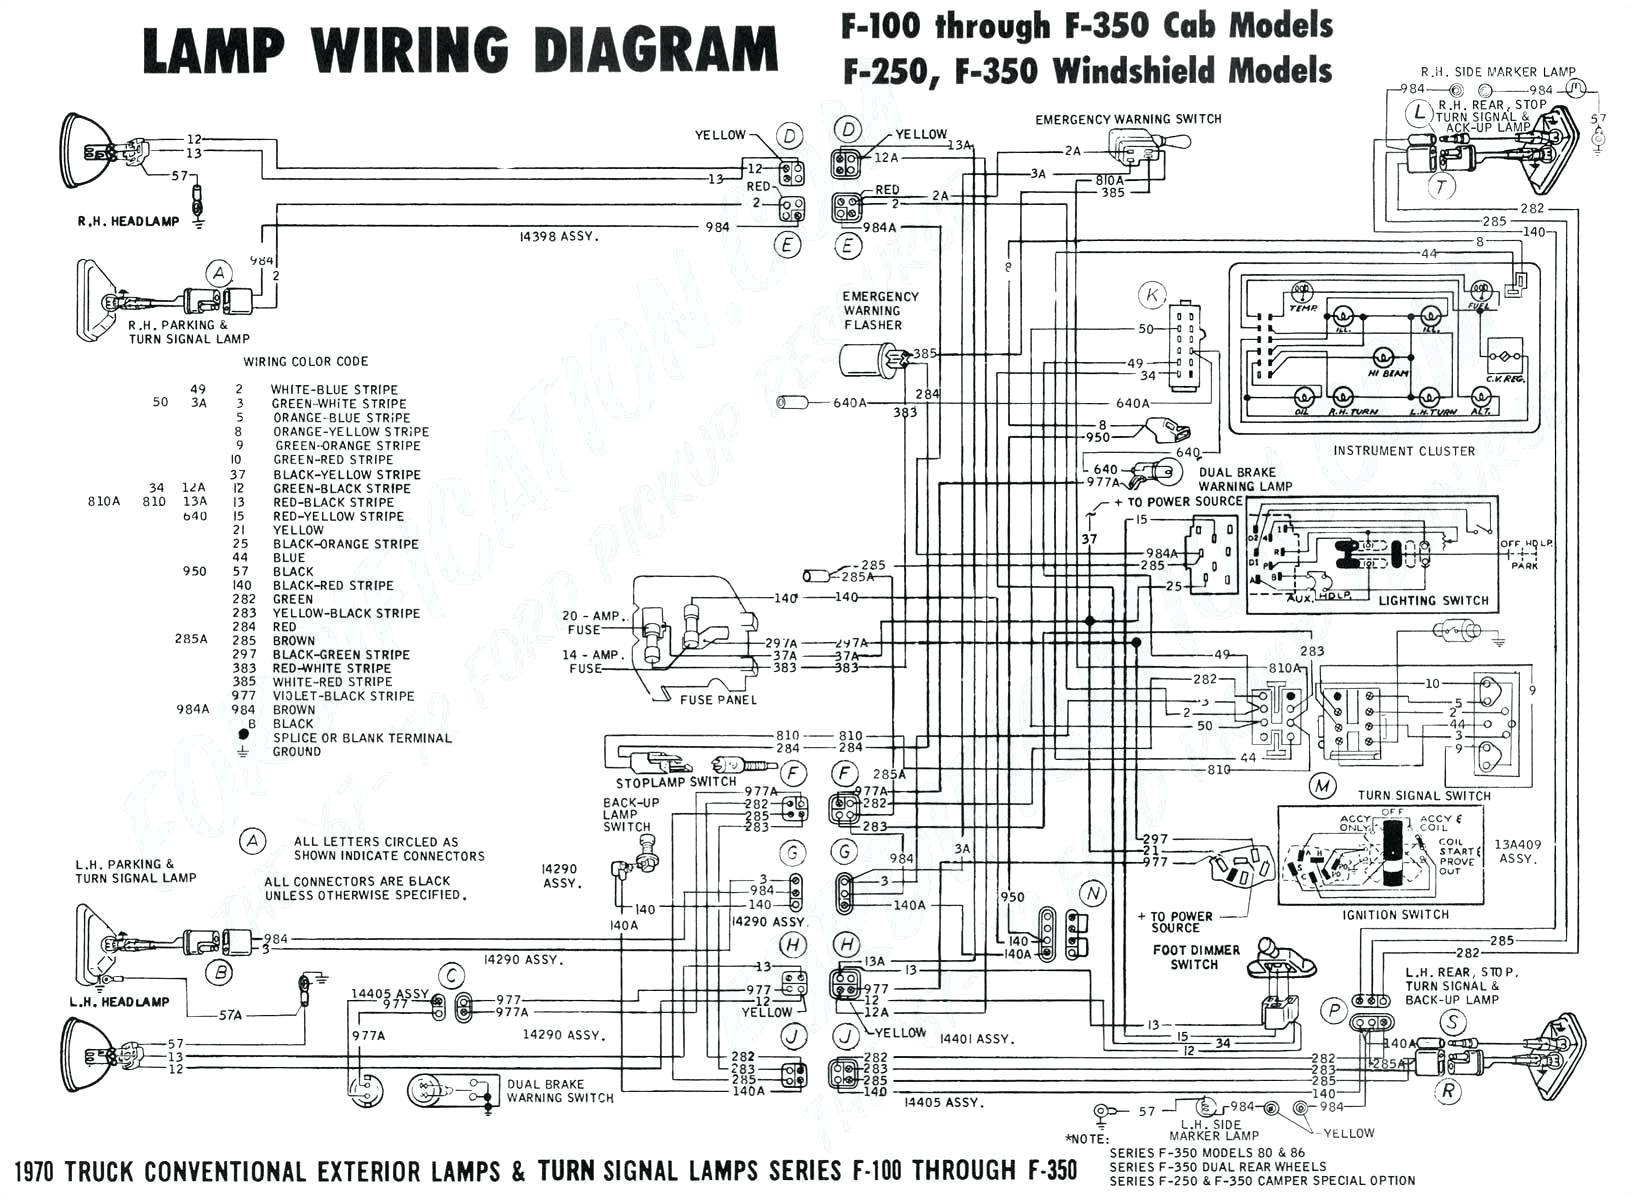 1987 dodge van alternator wiring wiring diagram used 1987 dodge van alternator wiring